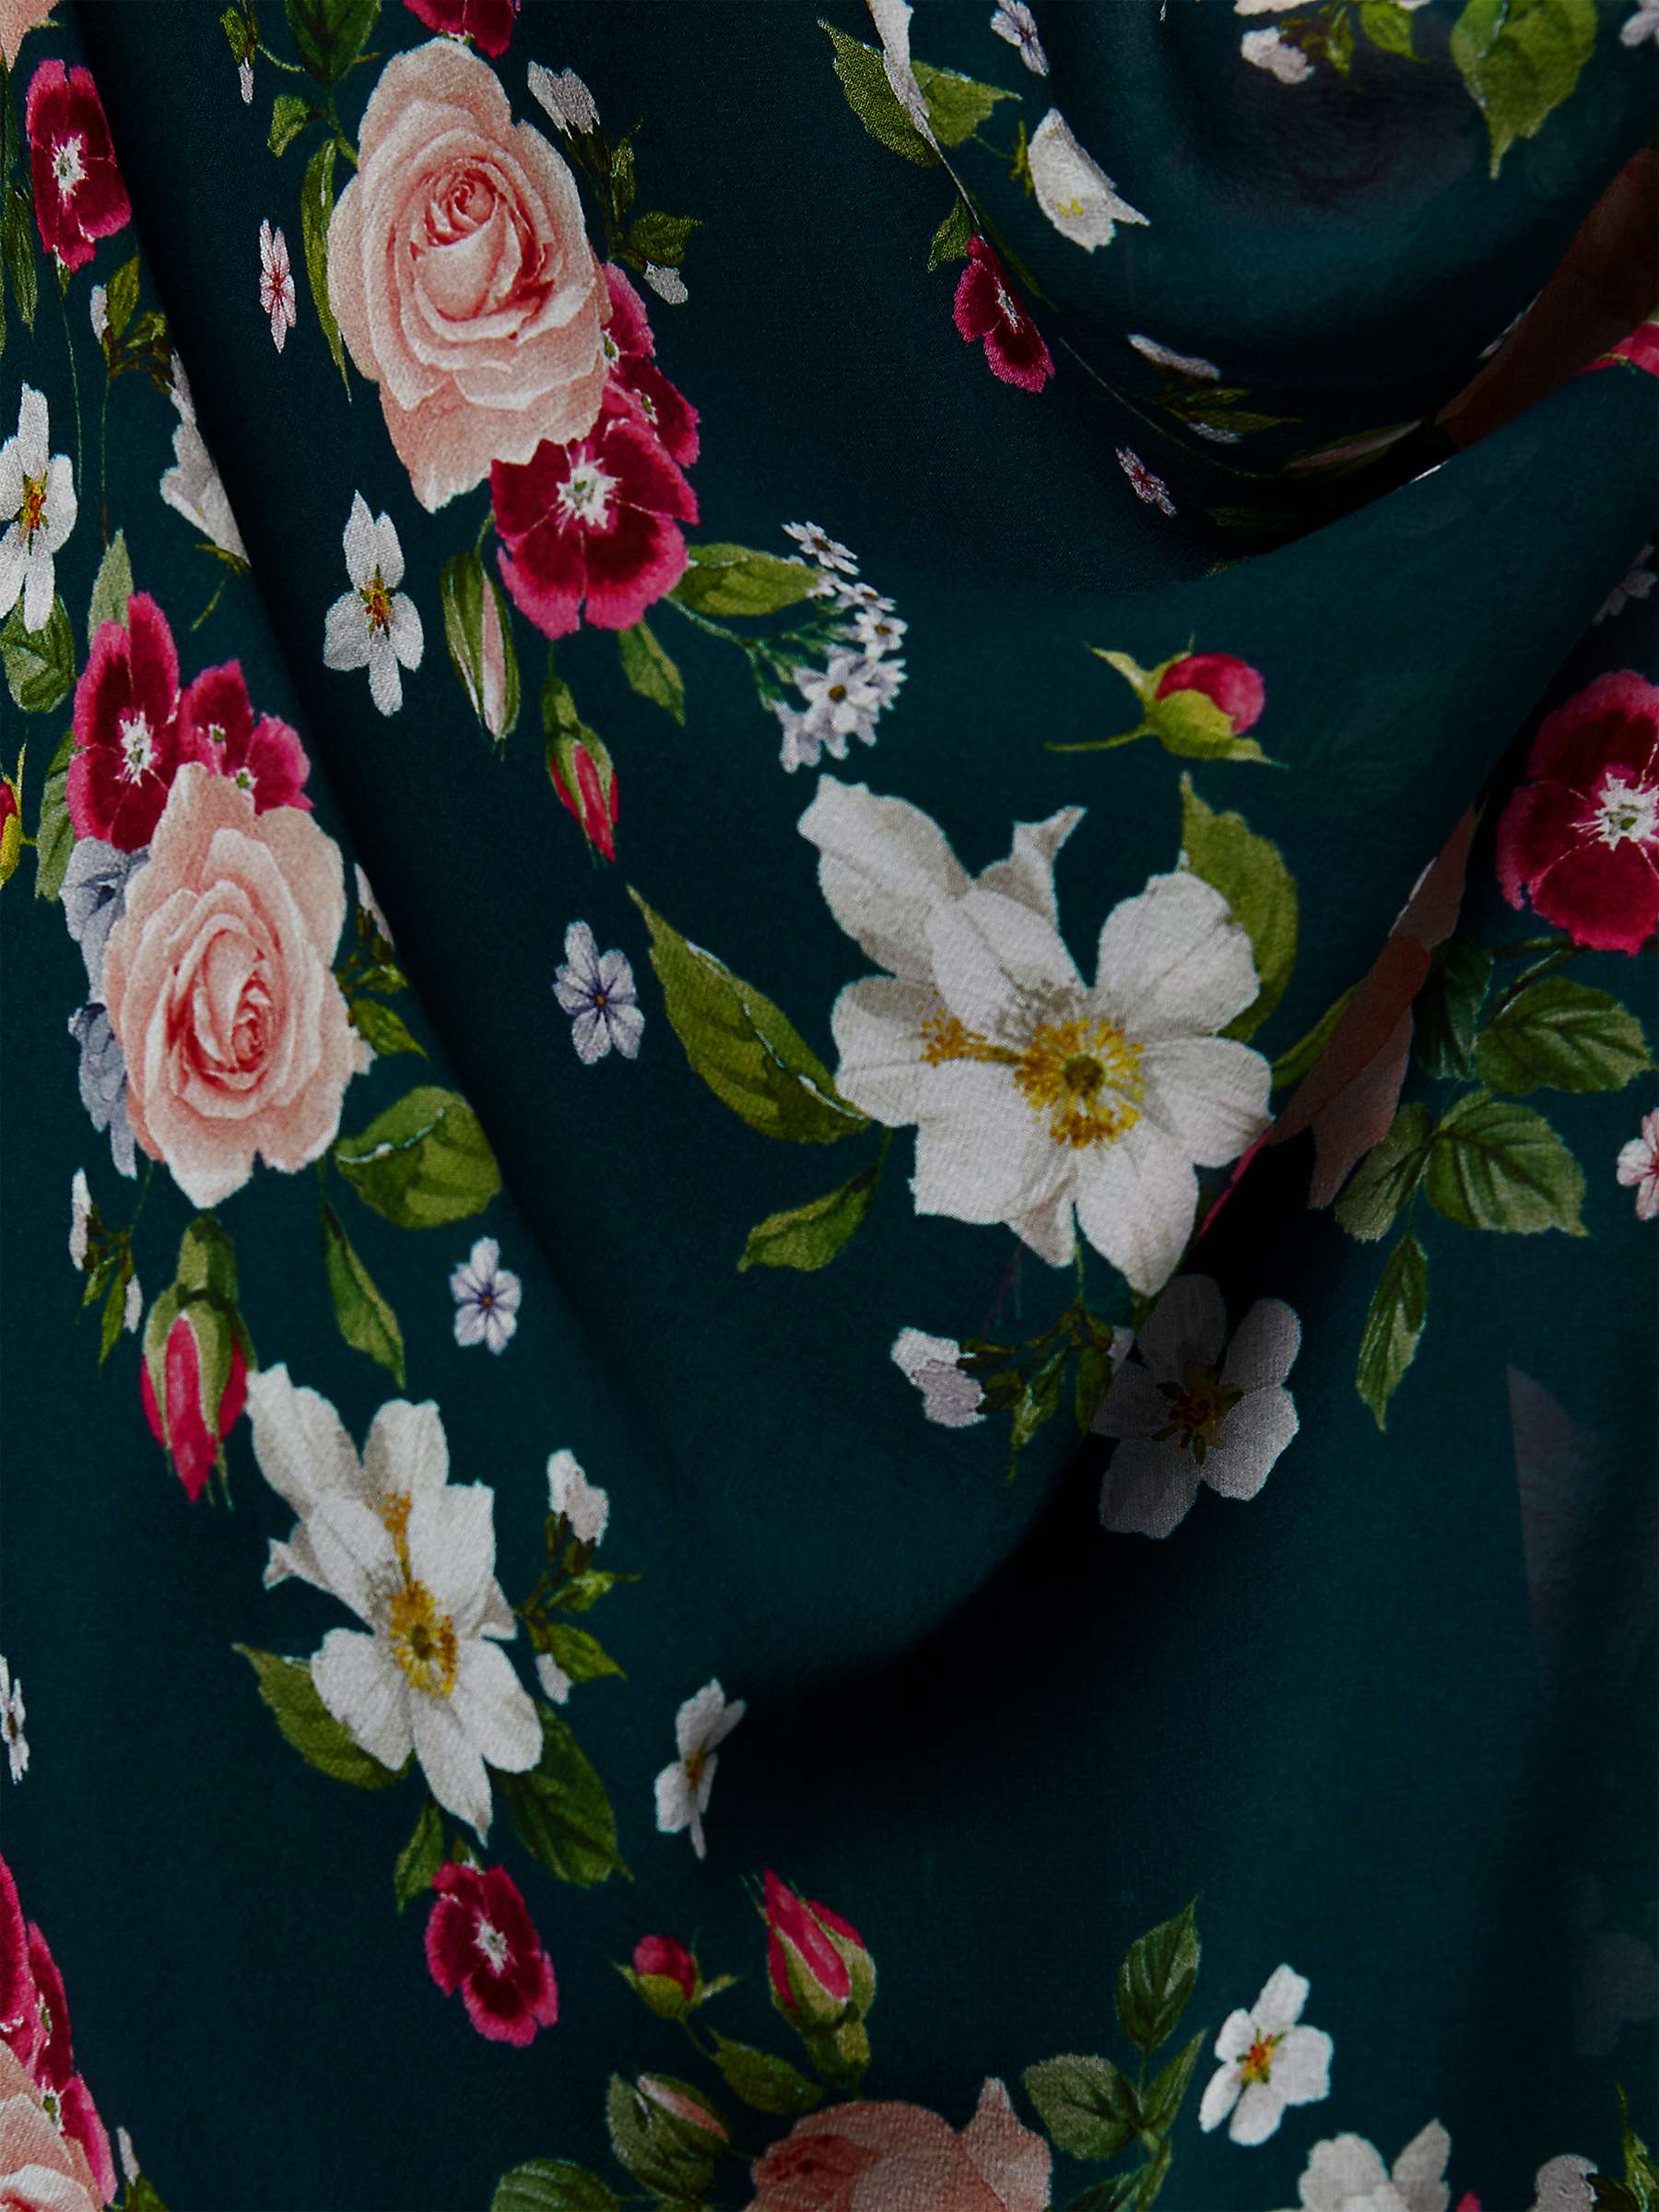 Buy Hobbs Helena Floral Print Silk Midi Dress, Green/Multi Online at johnlewis.com